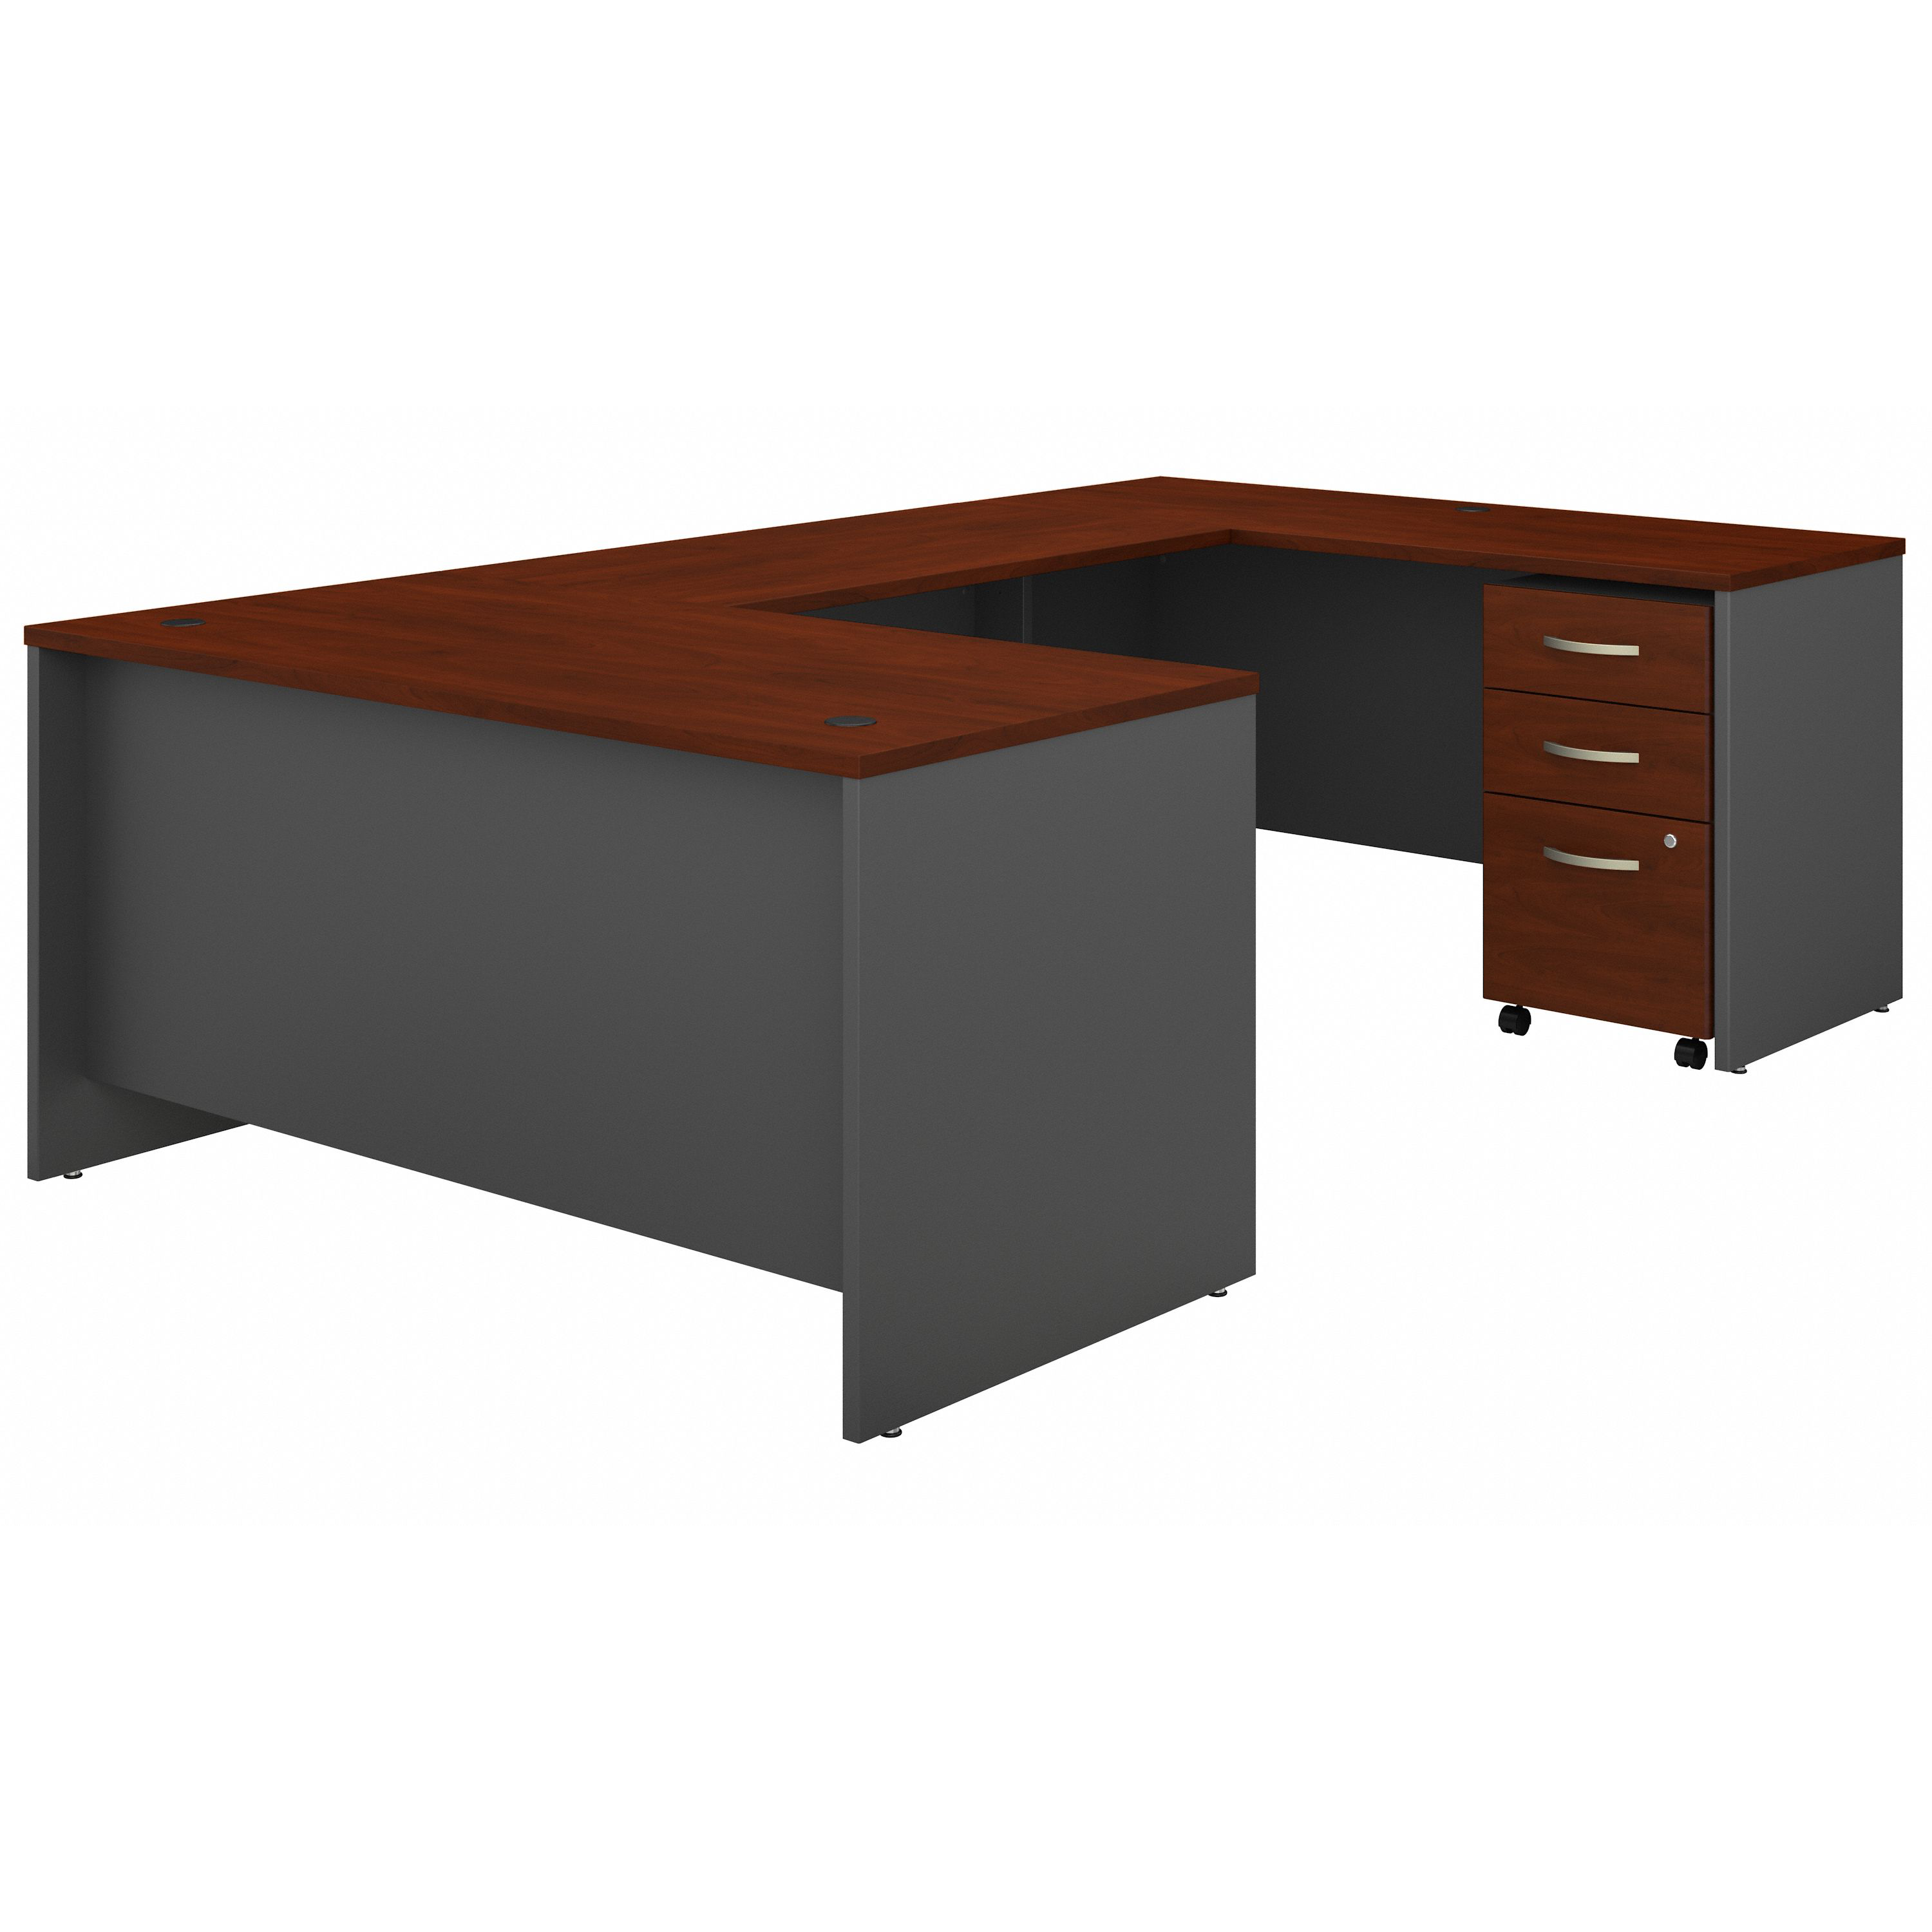 Shop Bush Business Furniture Series C 60W U Shaped Desk with 3 Drawer Mobile File Cabinet 02 SRC148HCSU #color_hansen cherry/graphite gray